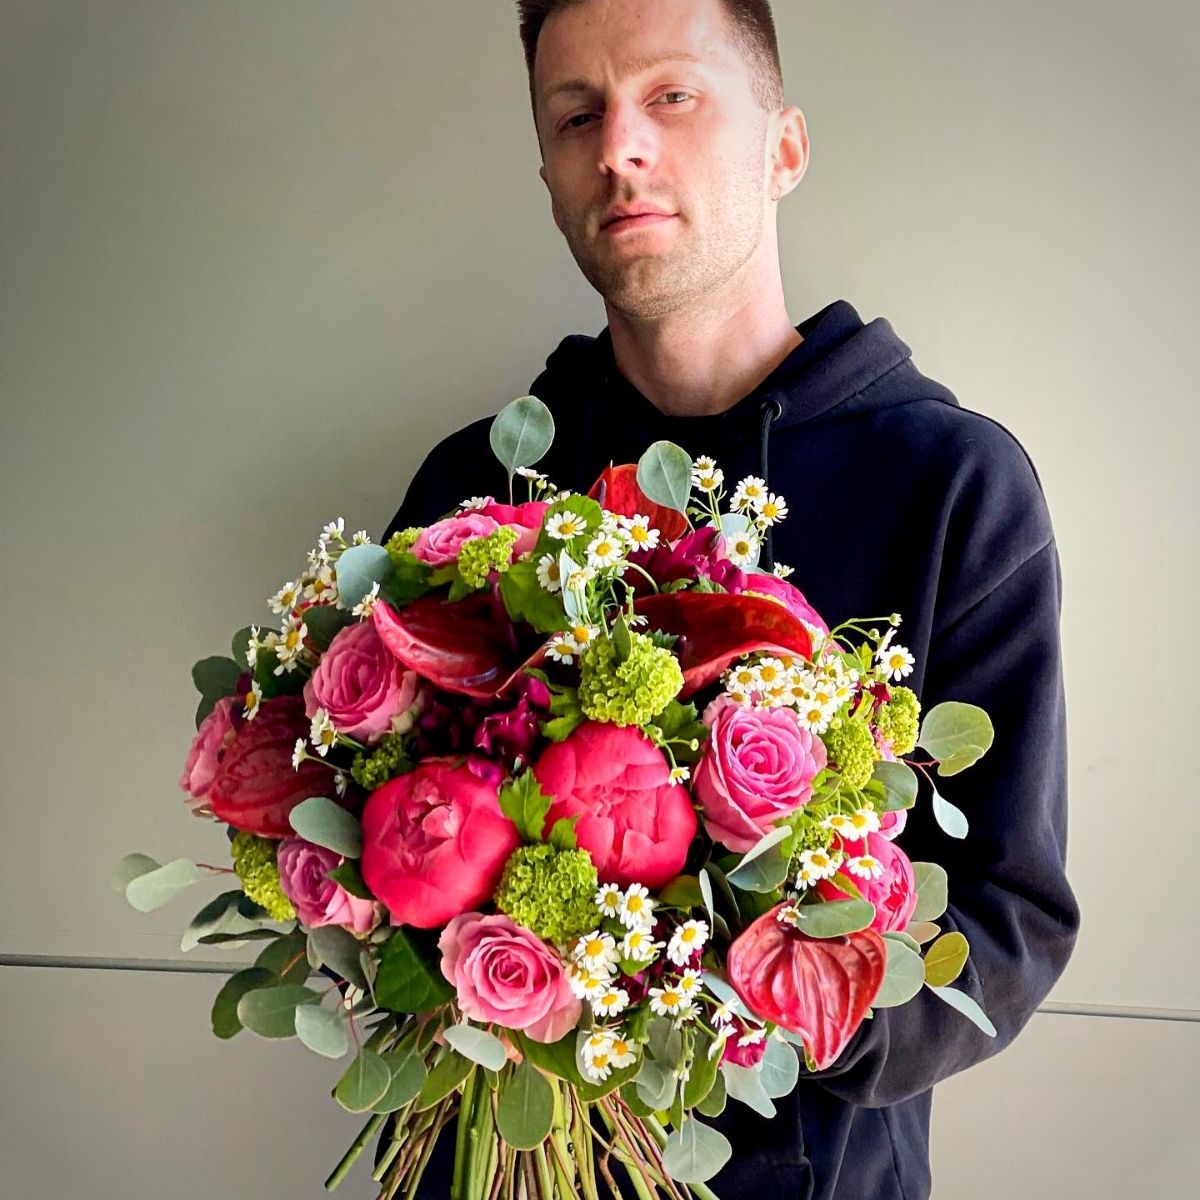 Mateusz Wasak with Dianthus Barbatus Amazon bouquet  on back - On Thursd. Featured